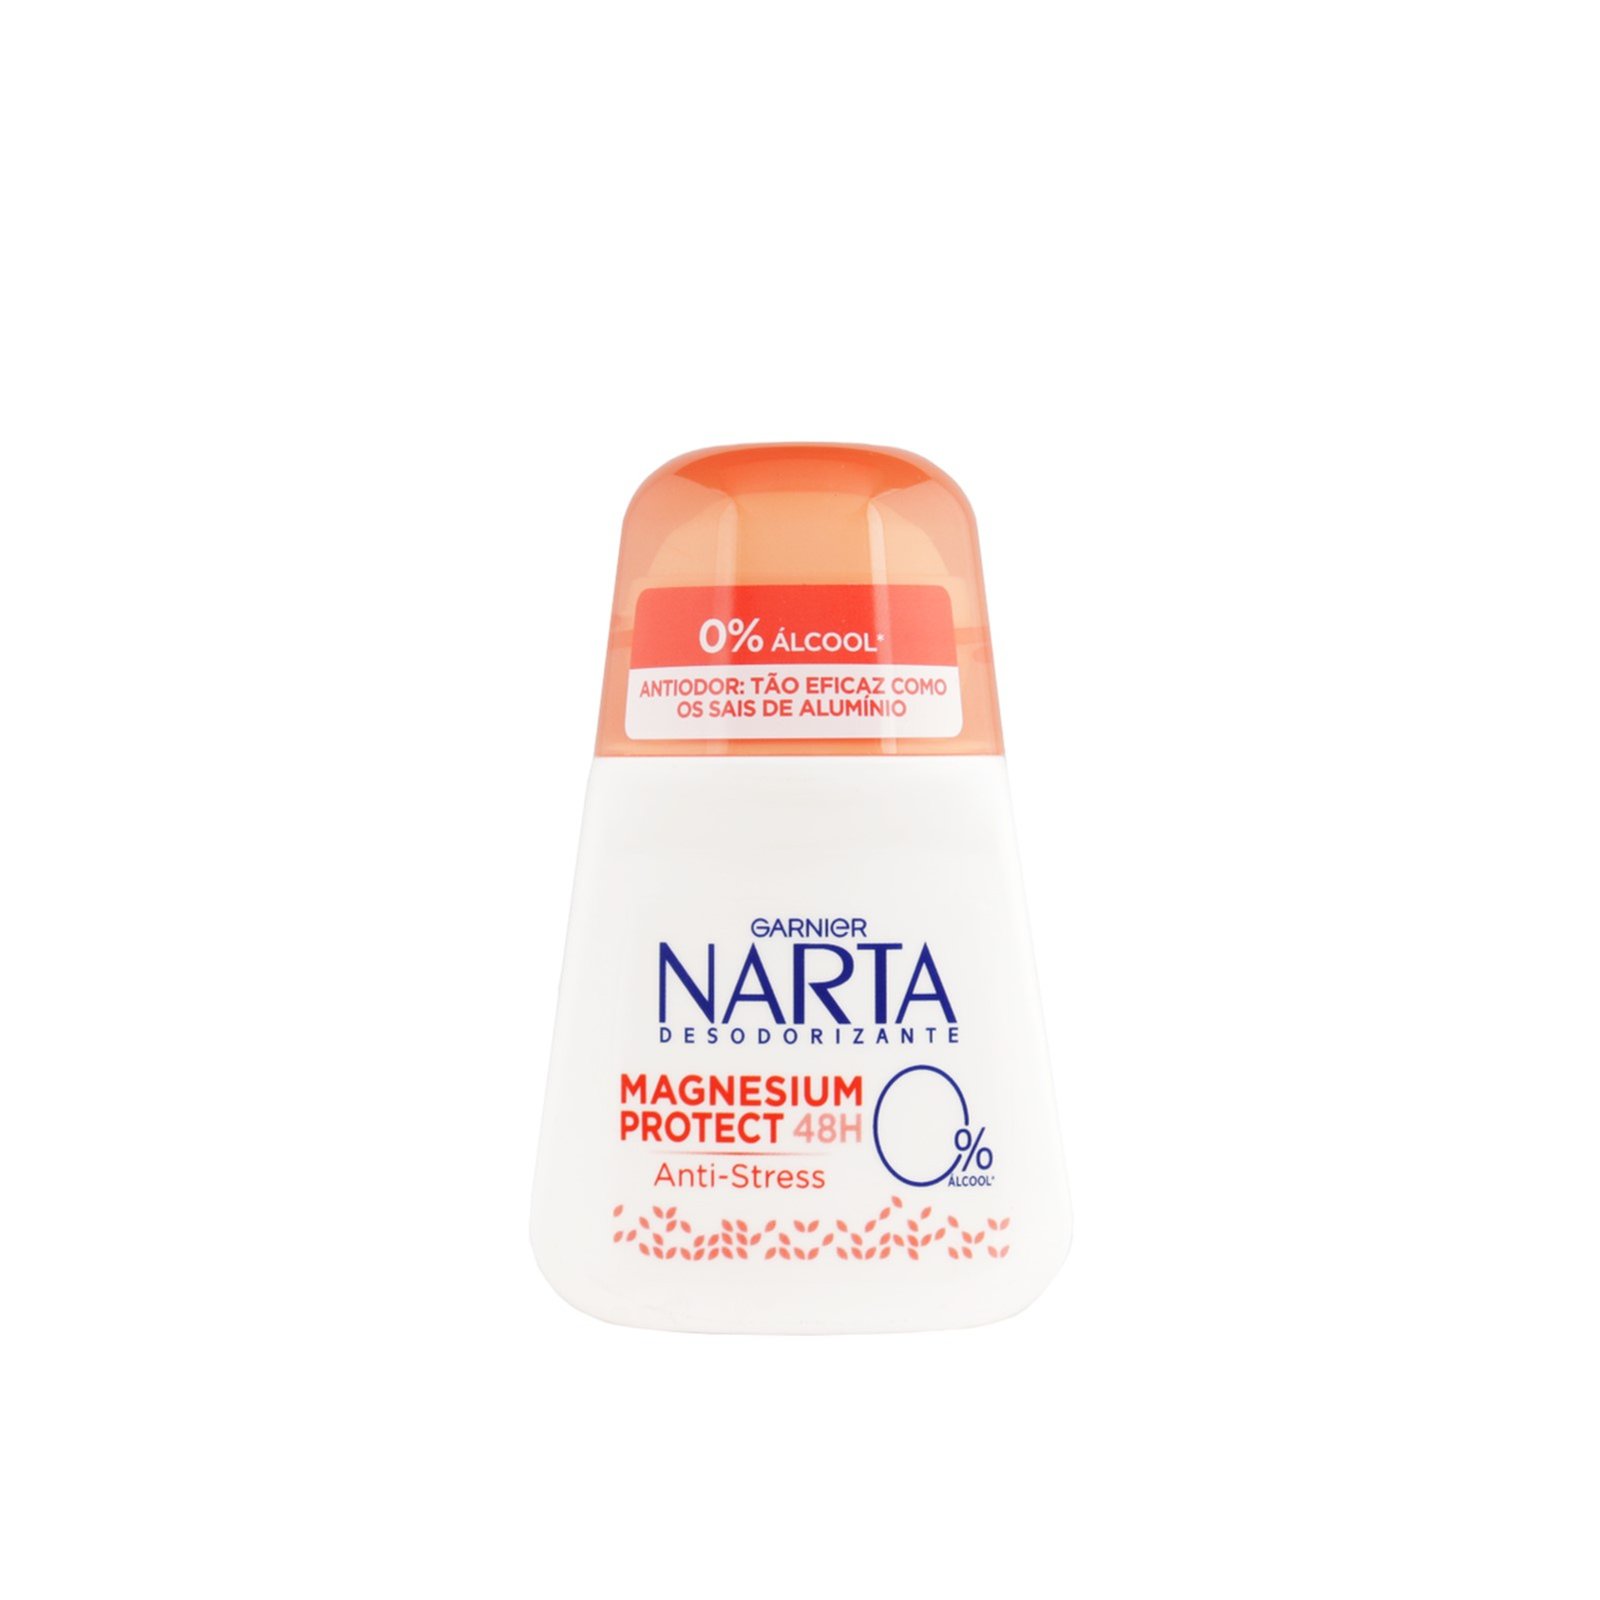 Garnier Narta Magnesium Protect 48h Anti-Stress Deodorant Roll-On 50ml